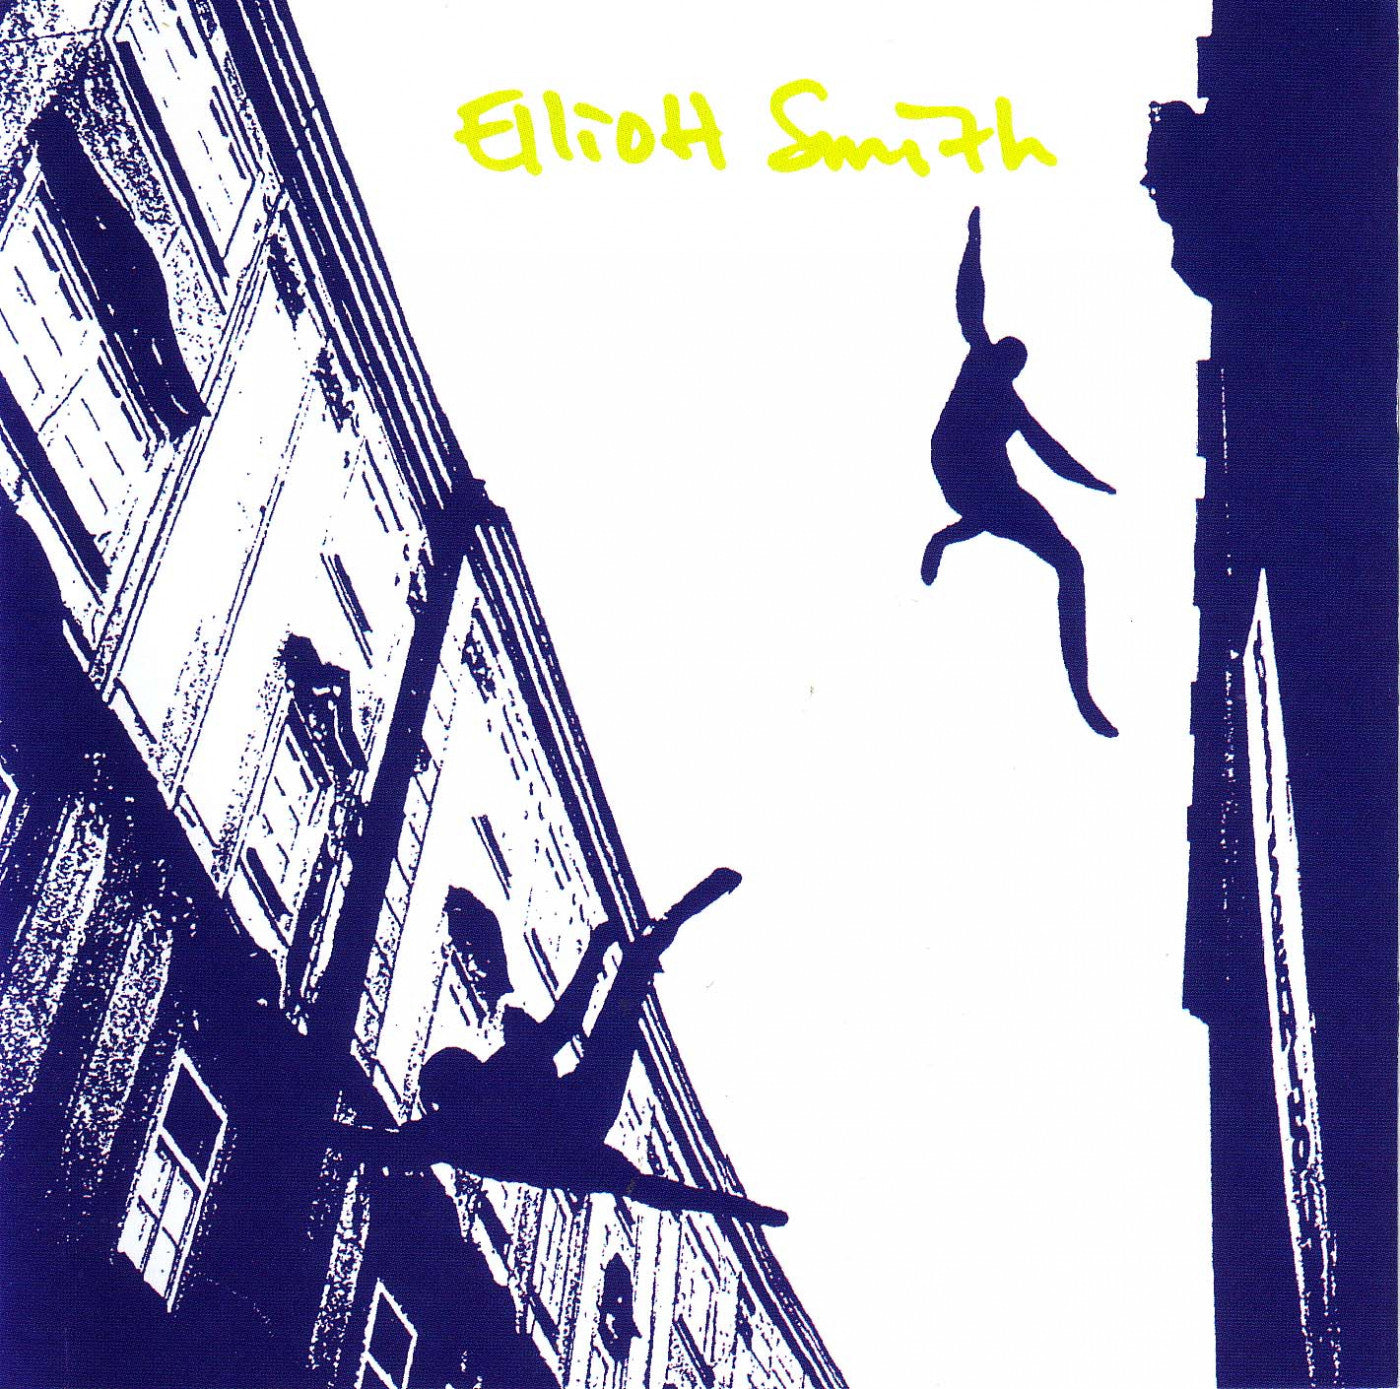 Elliott Smith- Elliott Smith (25th Anniversary Remaster)